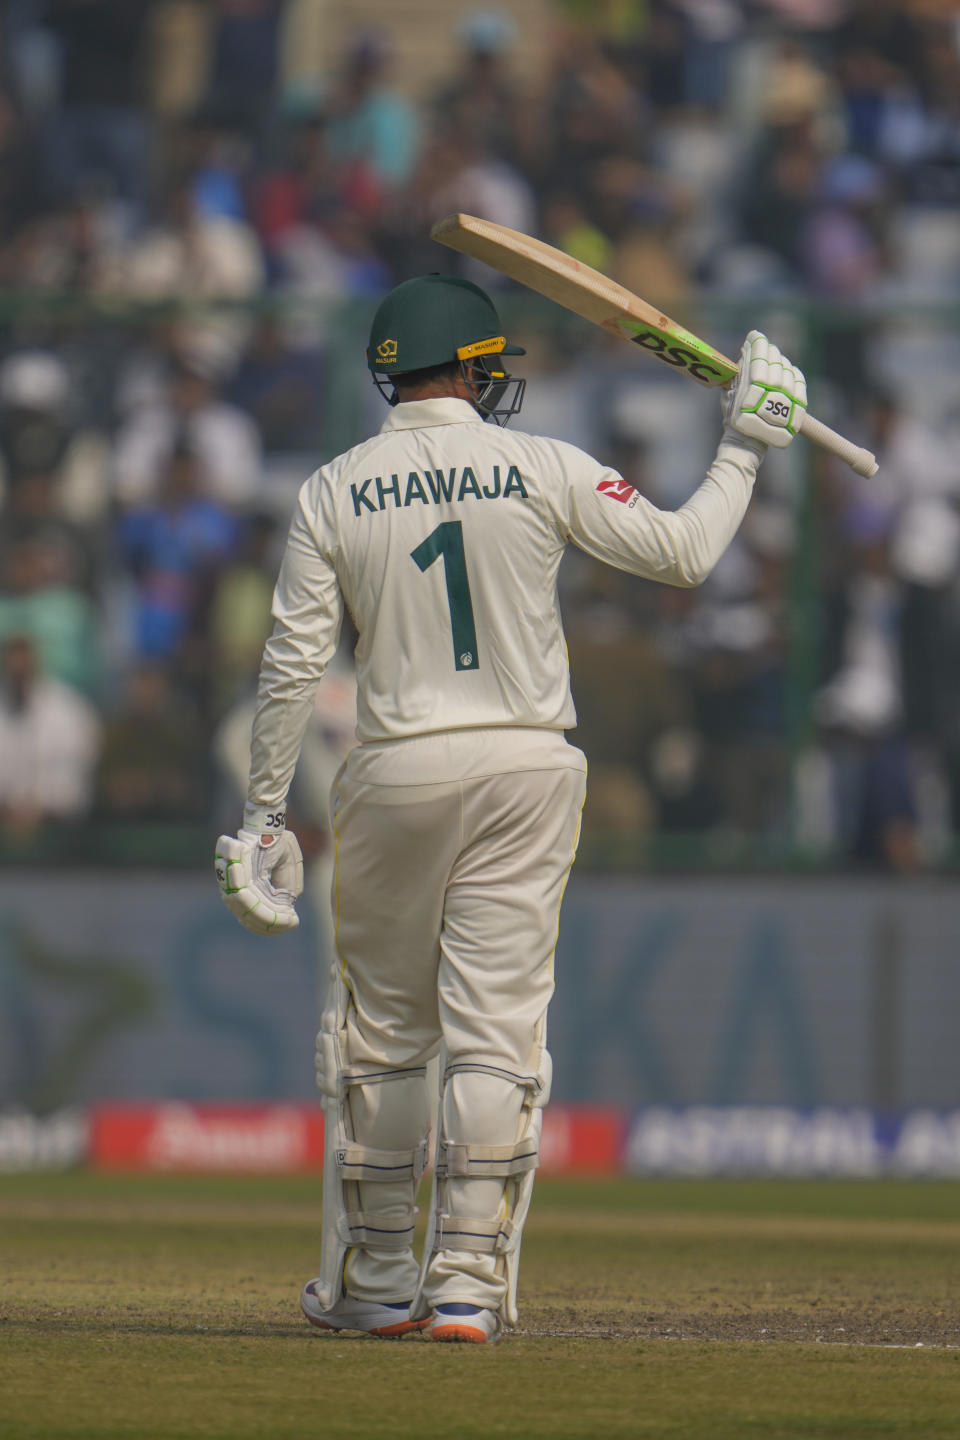 Australia's Usman Khawaja raises his bat to celebrate scoring a half century during the first day of the second cricket test match between India and Australia in New Delhi, India, Friday, Feb. 17, 2023. (AP Photo/Altaf Qadri)